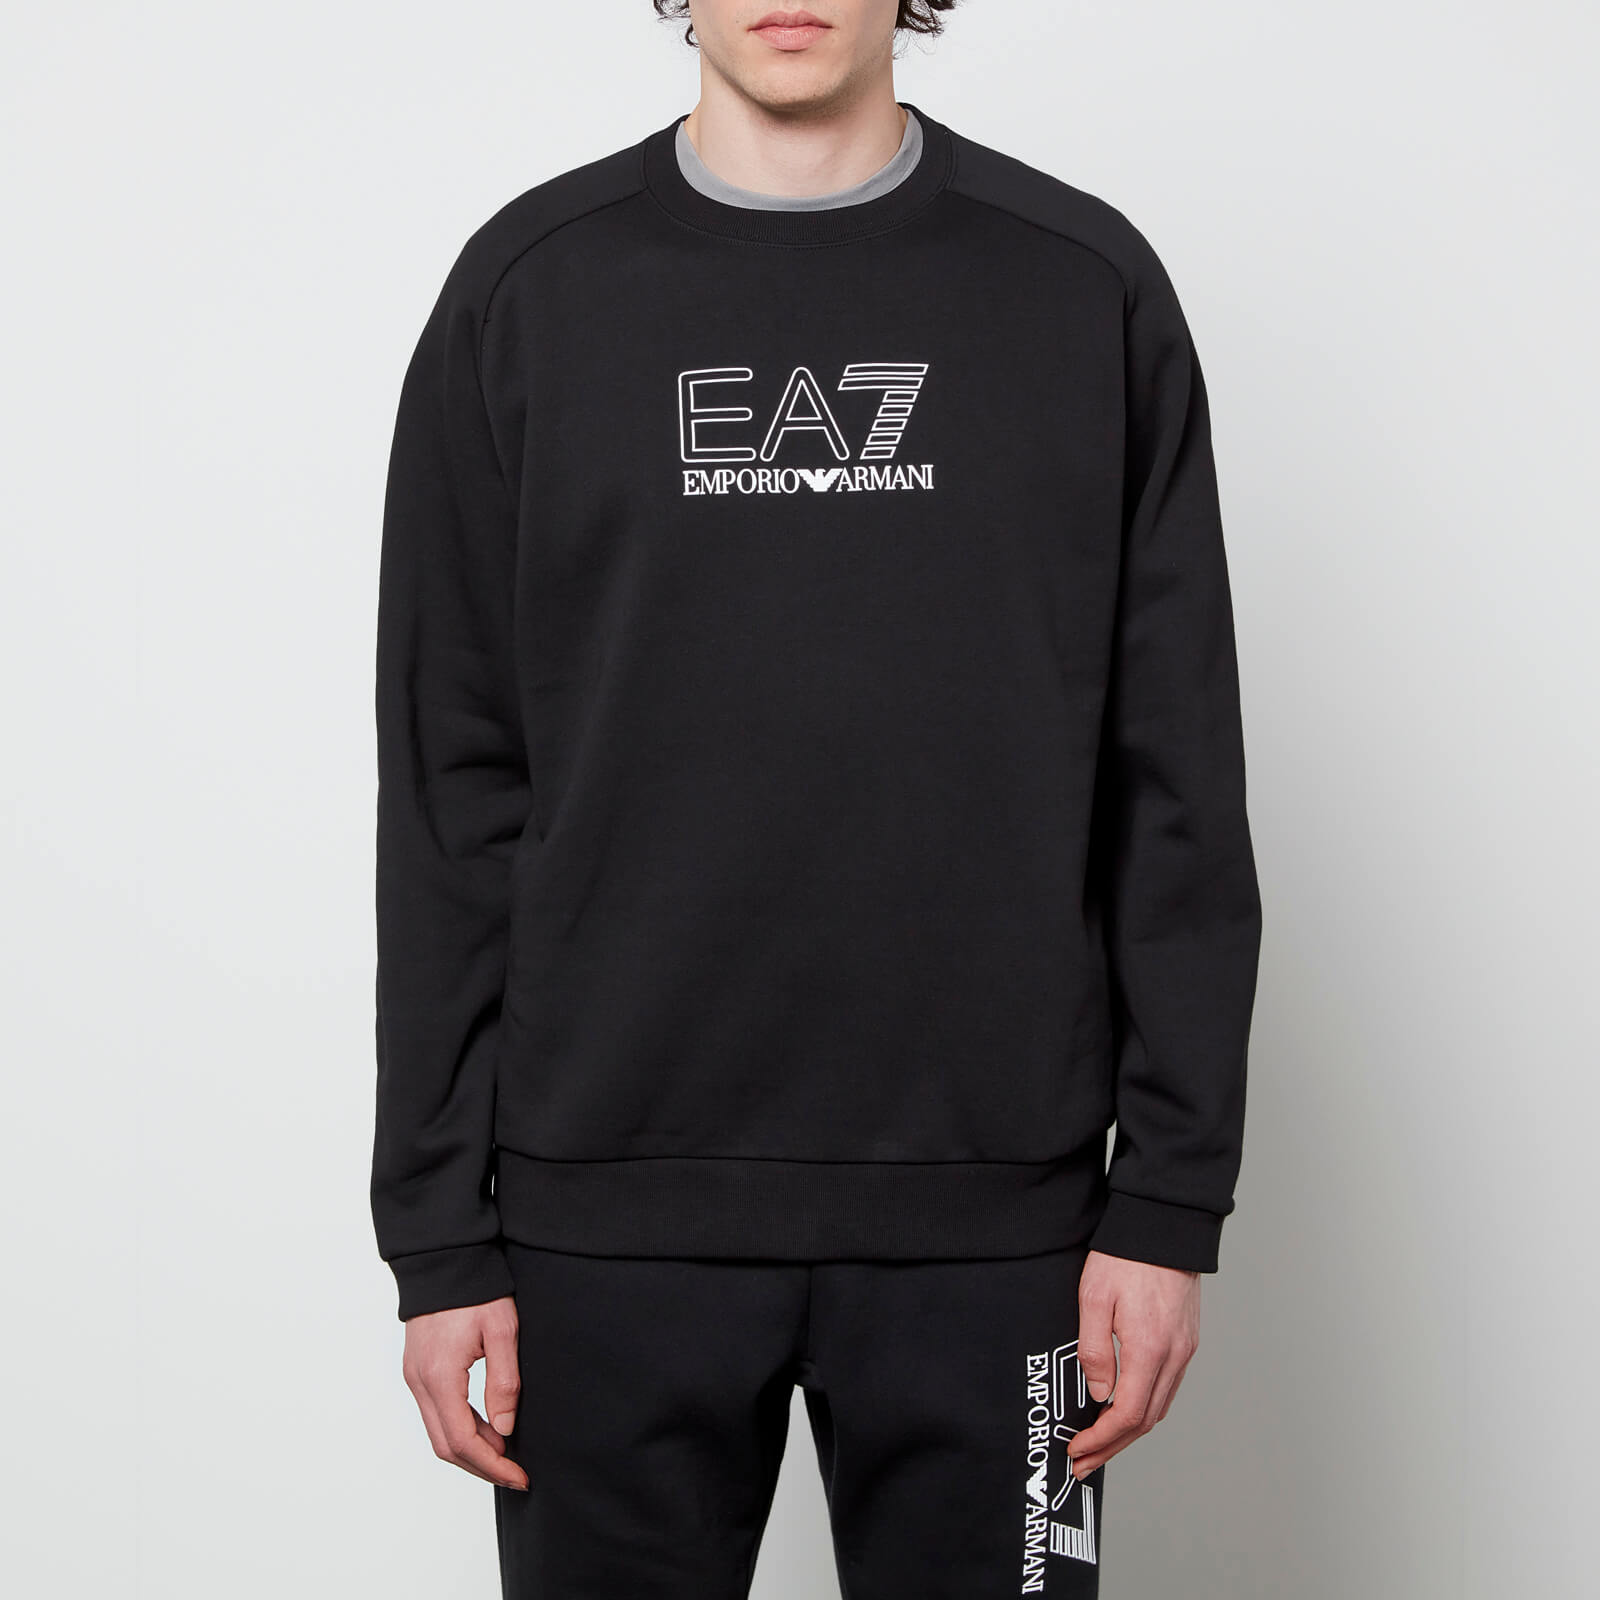 Ea7 Men's Visability Fleece Sweatshirt - Black - Xxl